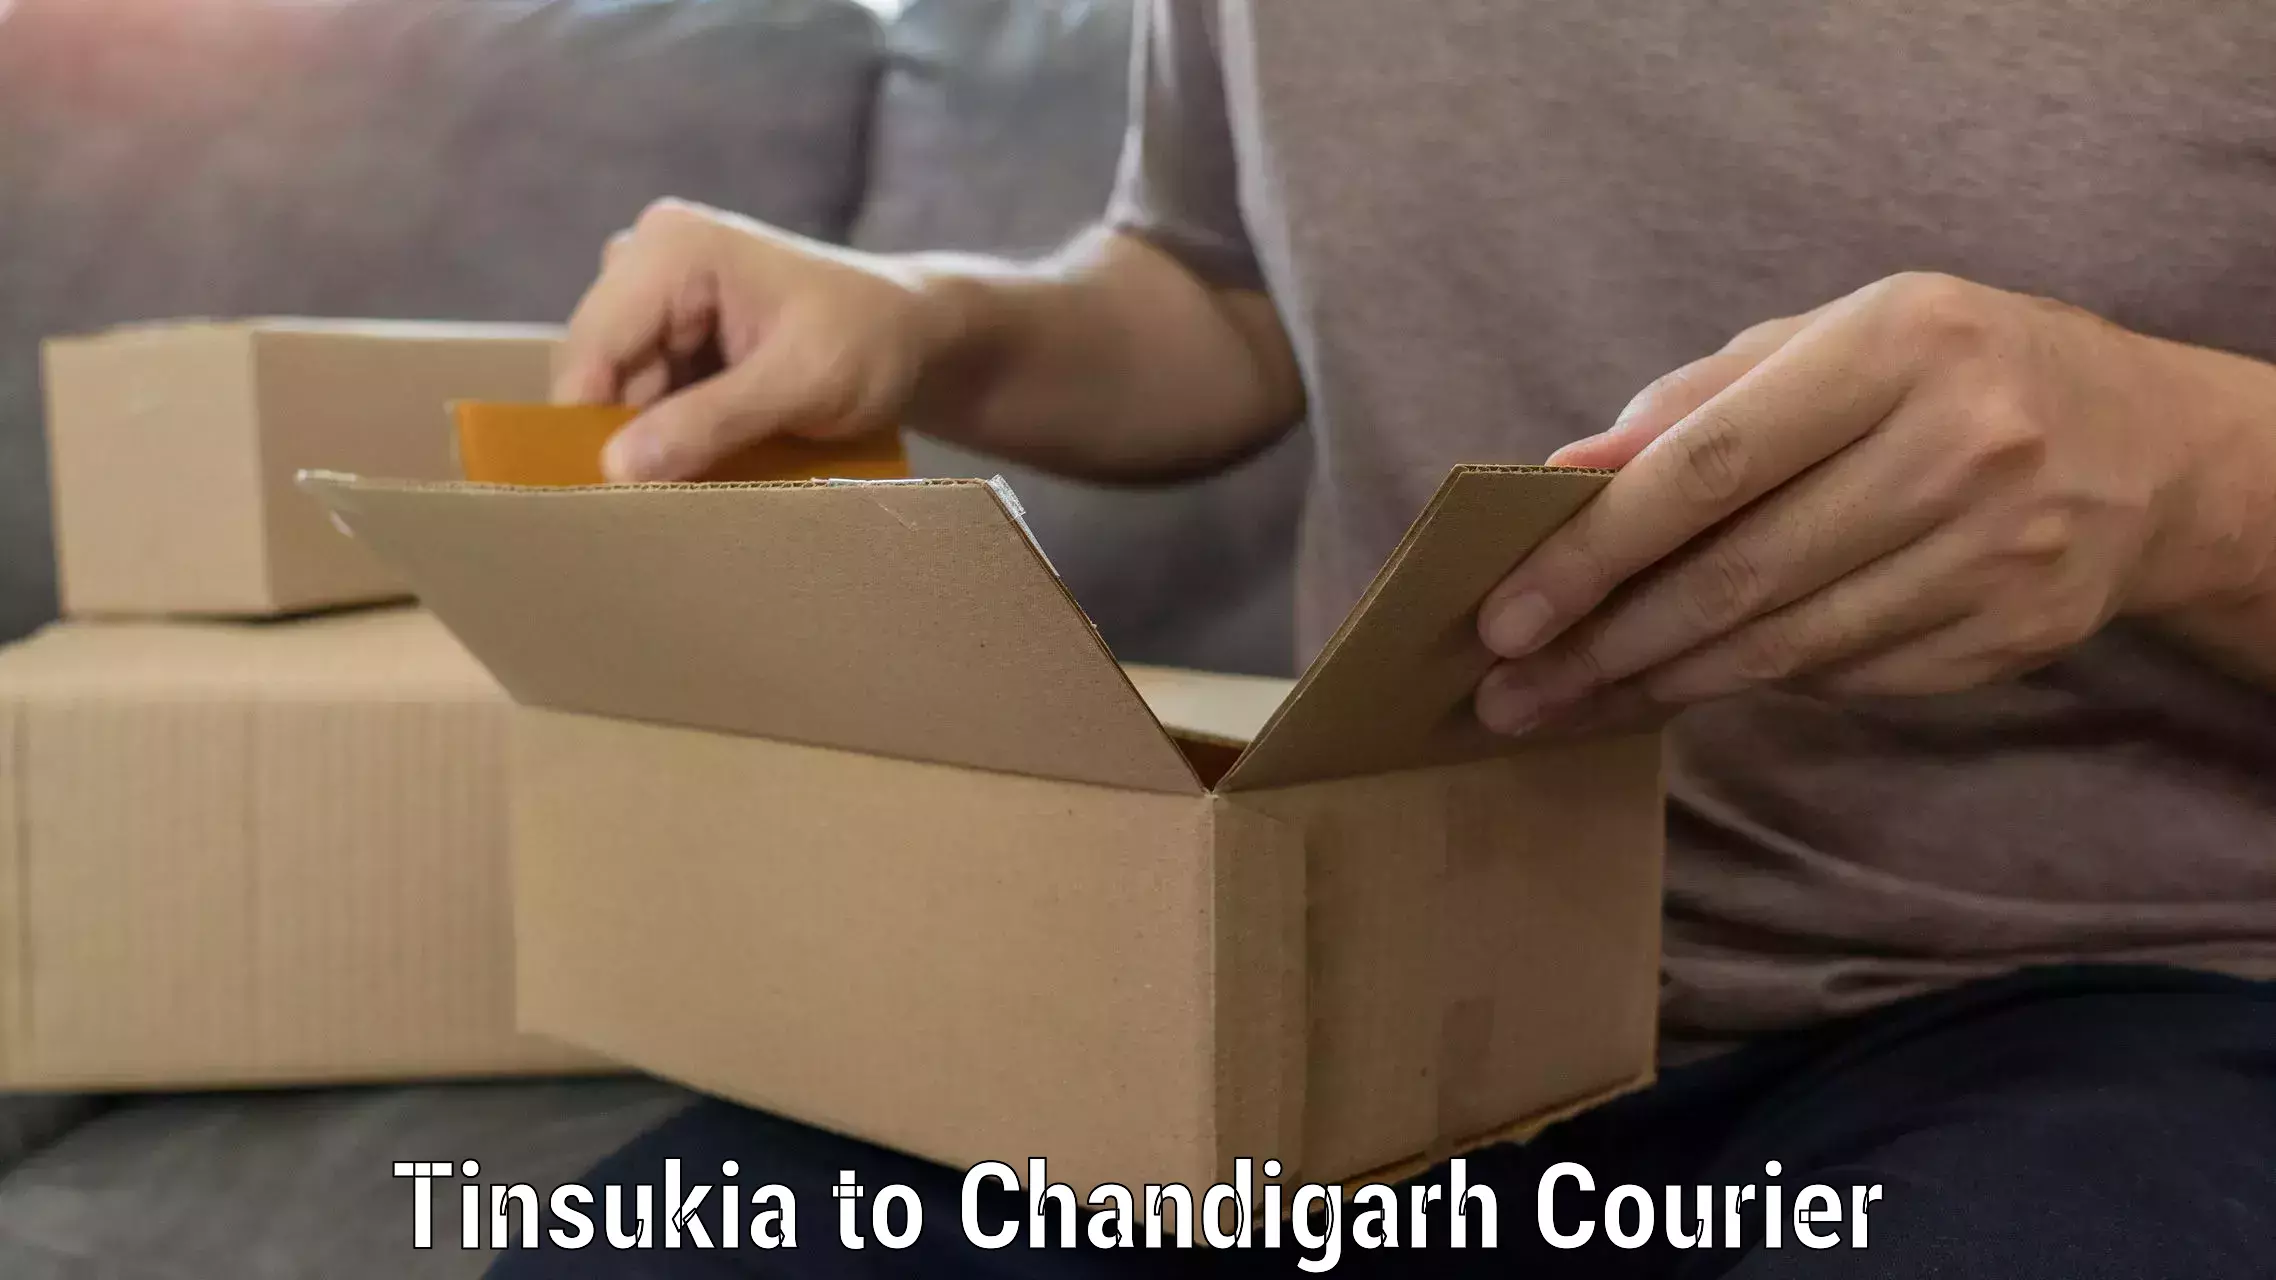 Moving and packing experts Tinsukia to Chandigarh